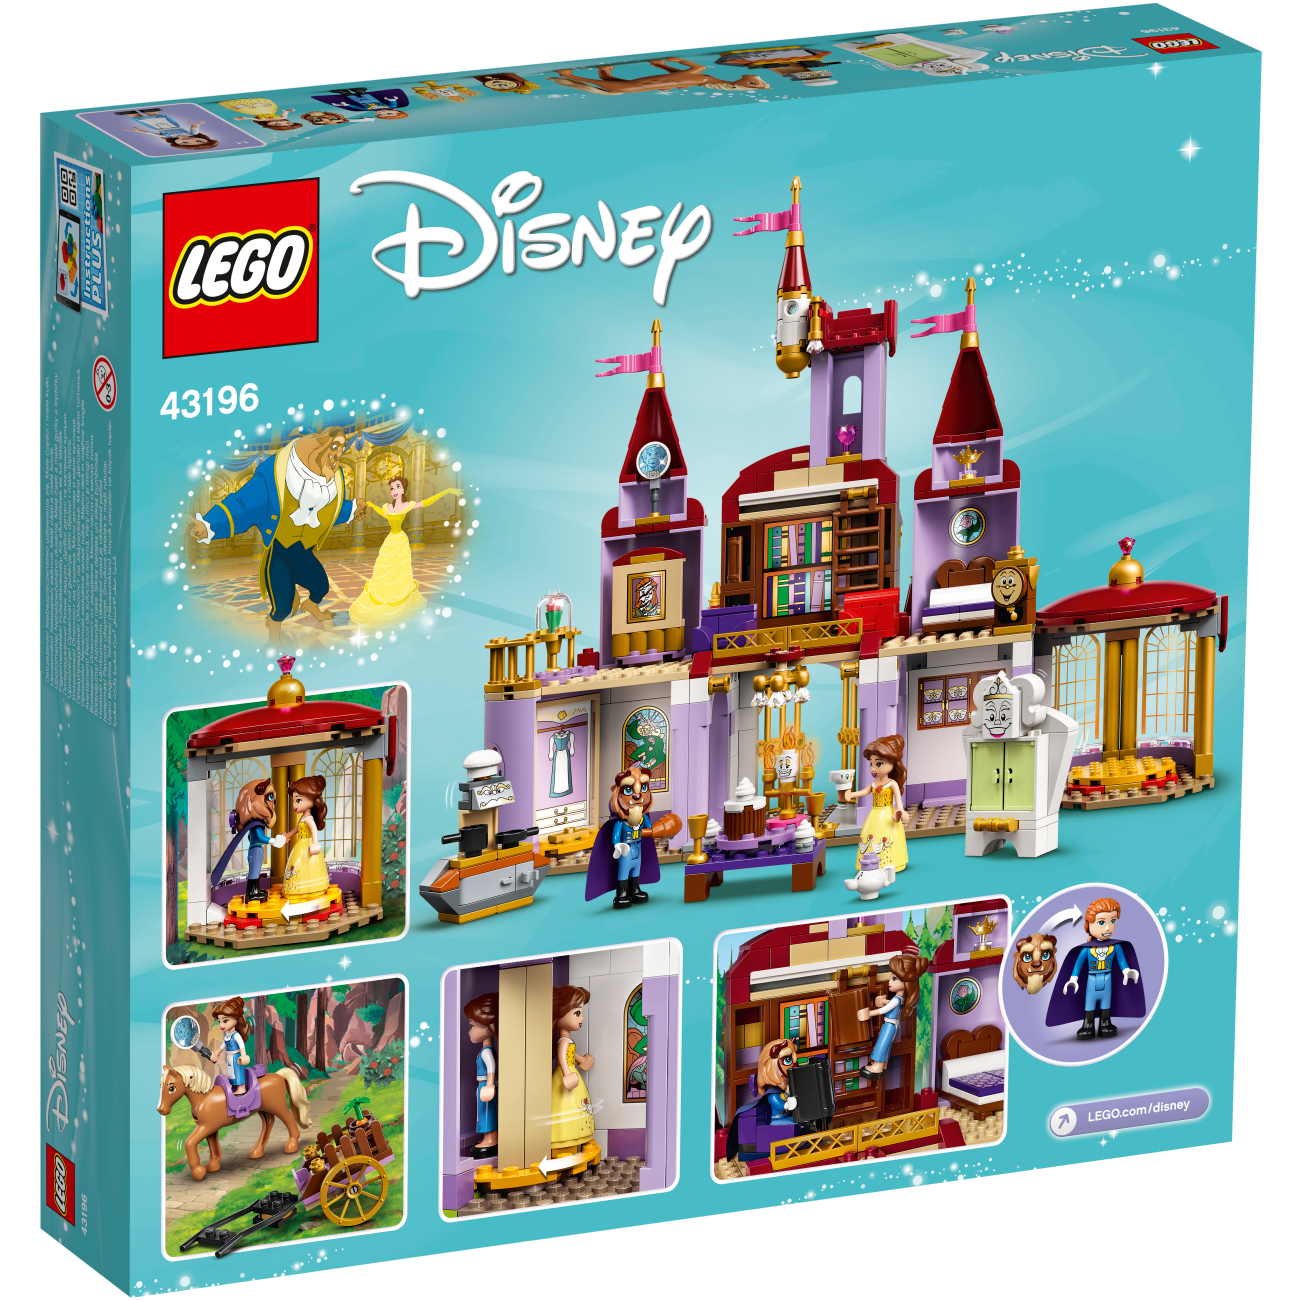 LEGO Disney Princess 43196 - Belles Schloss